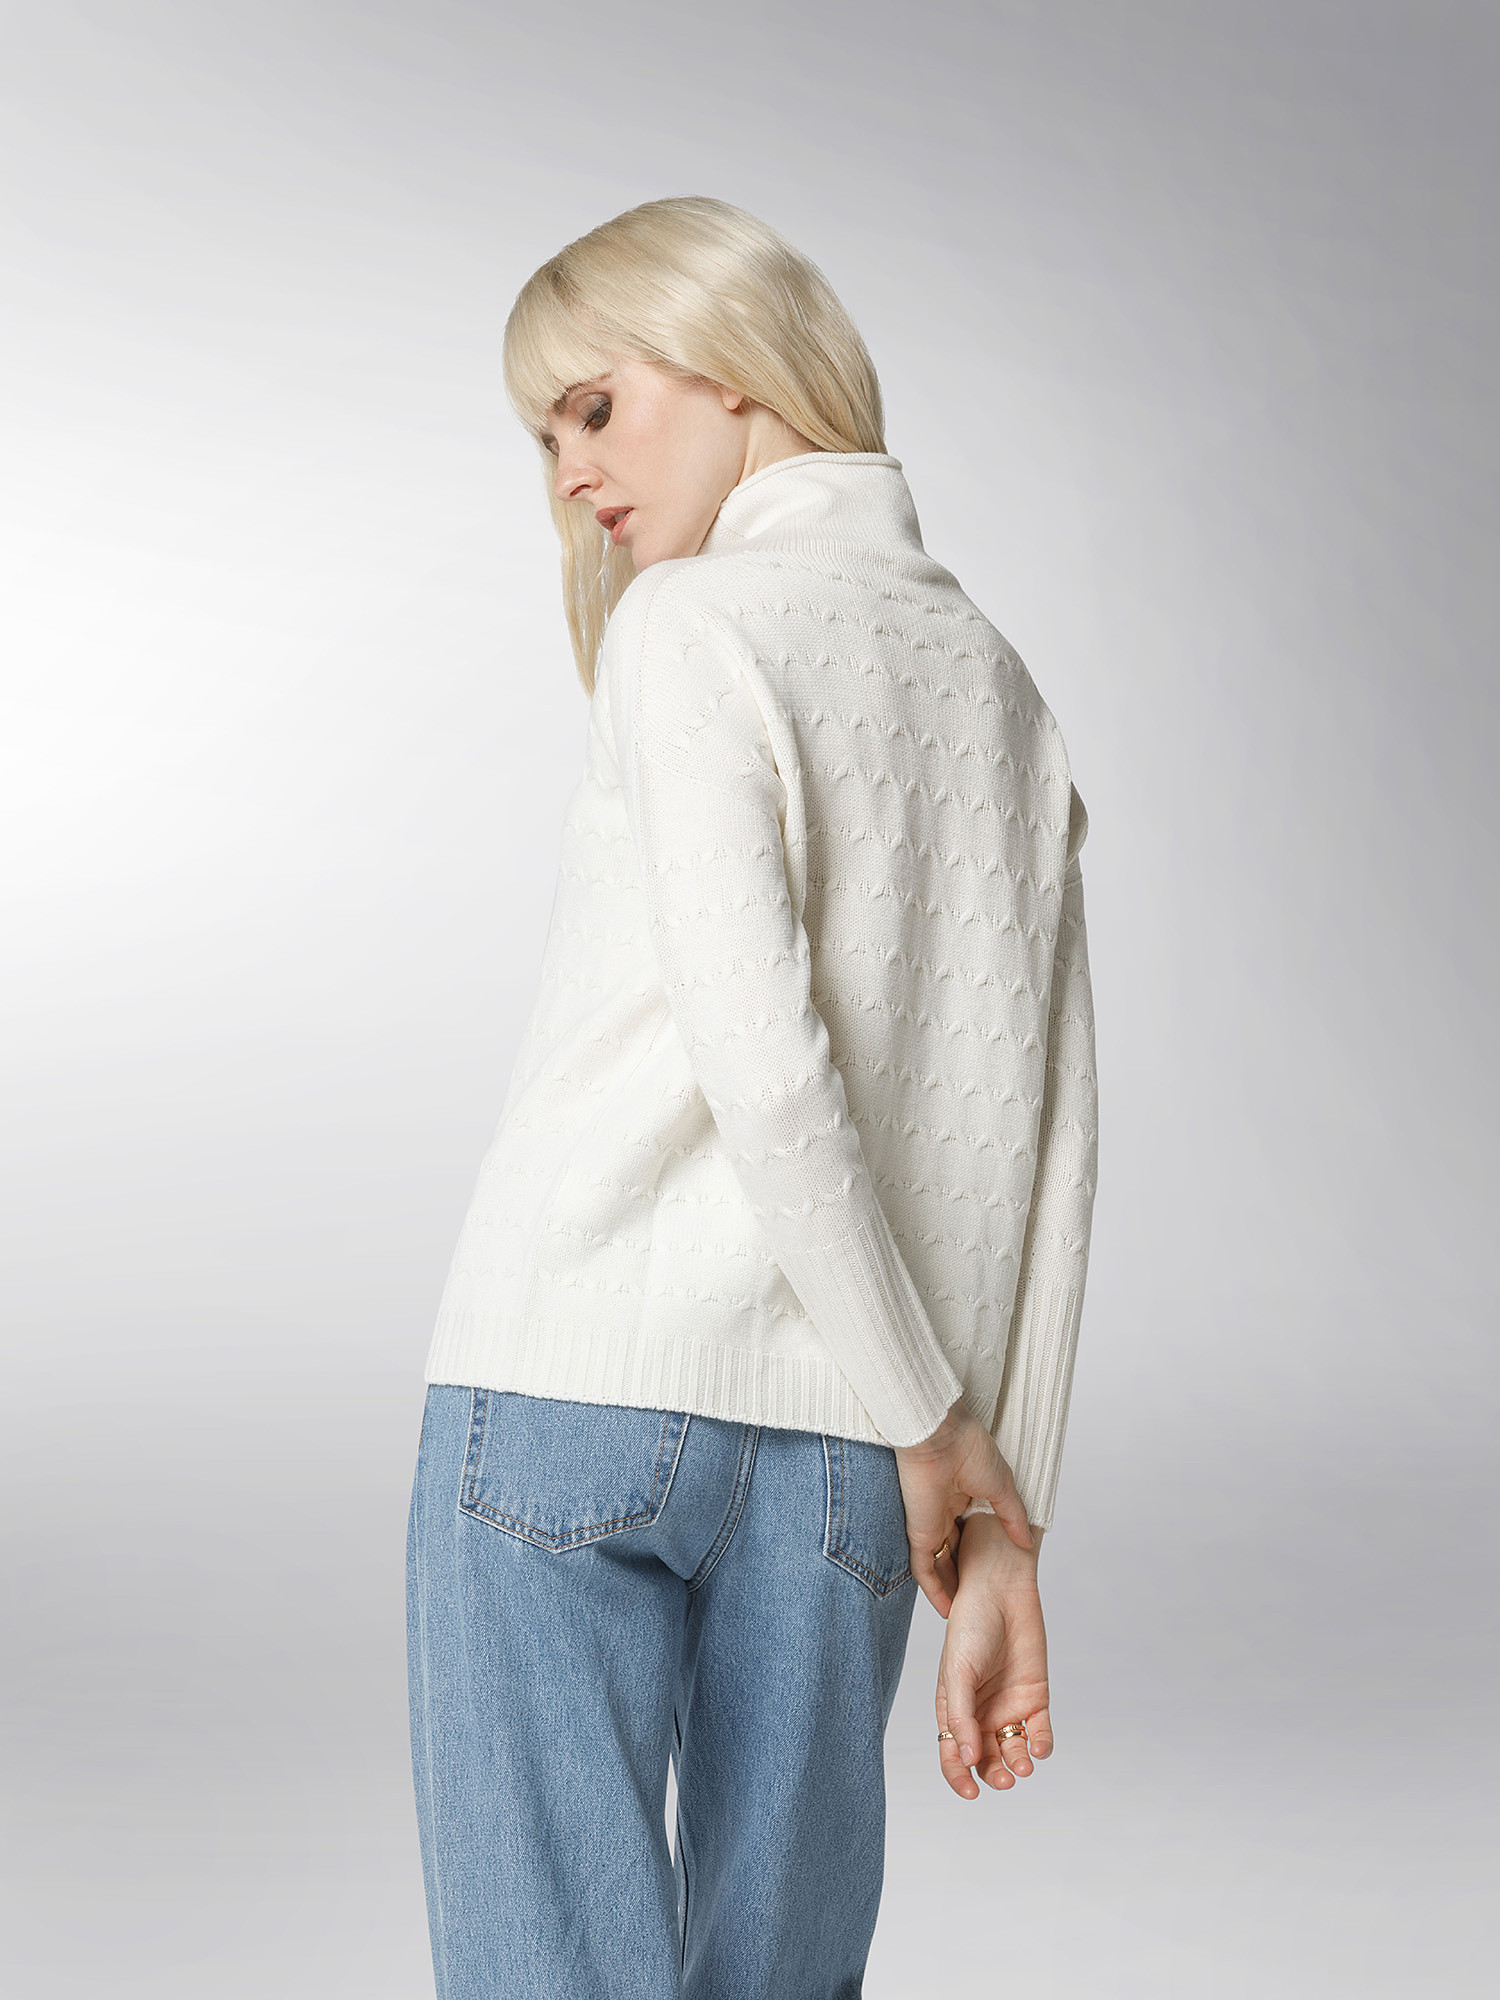 K Collection - Knitted turtleneck pullover, Ecru, large image number 4